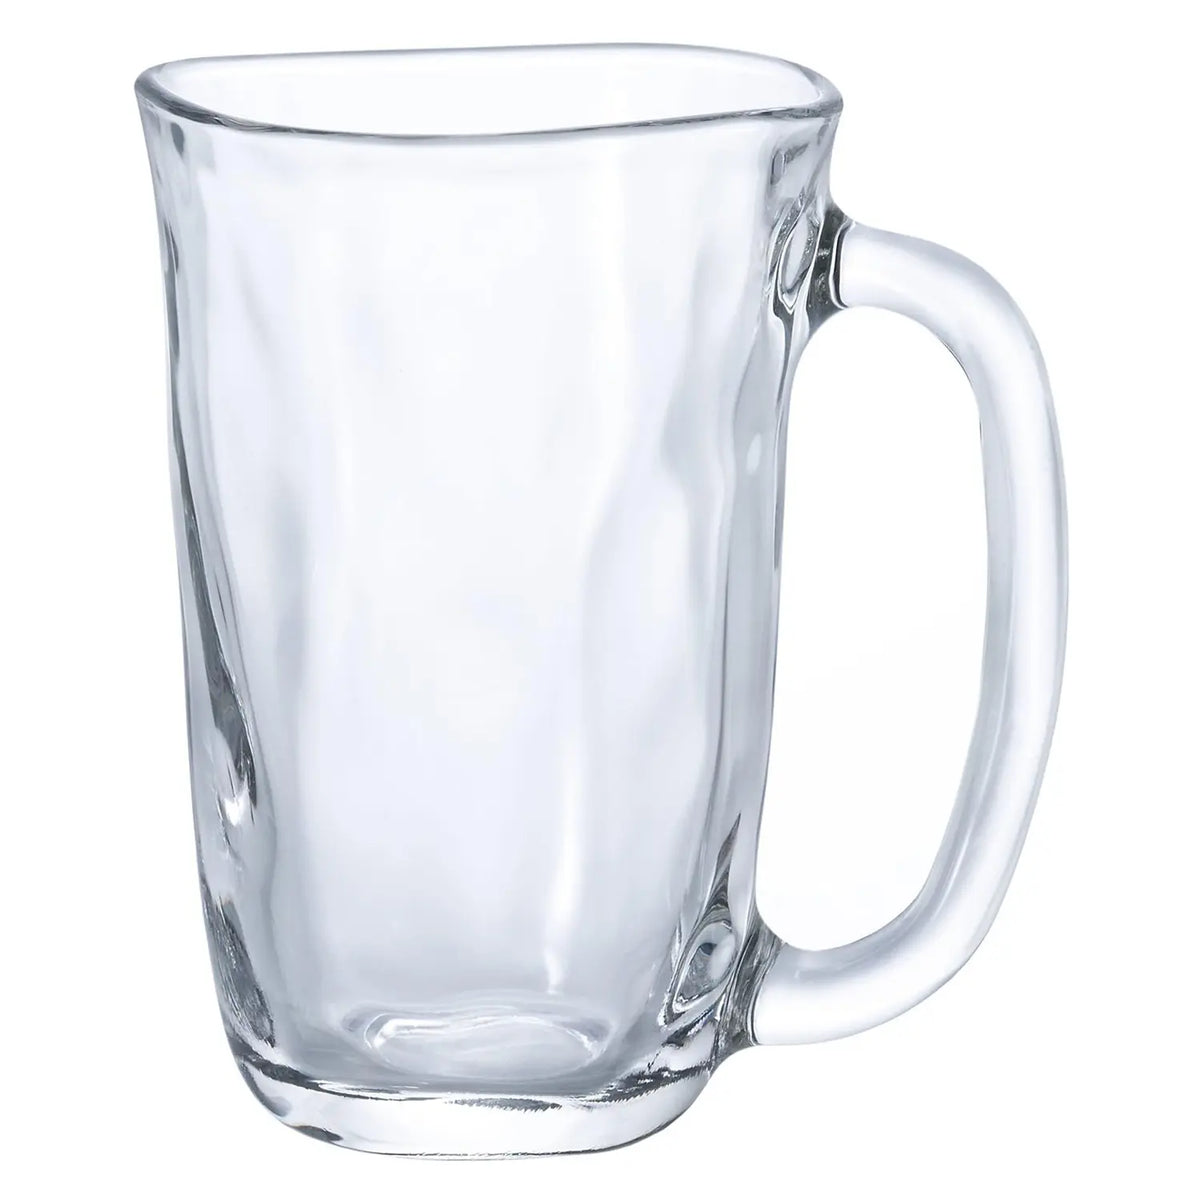 ADERIA Tebineri Soda-Lime Glass Beer Mug Set of 3